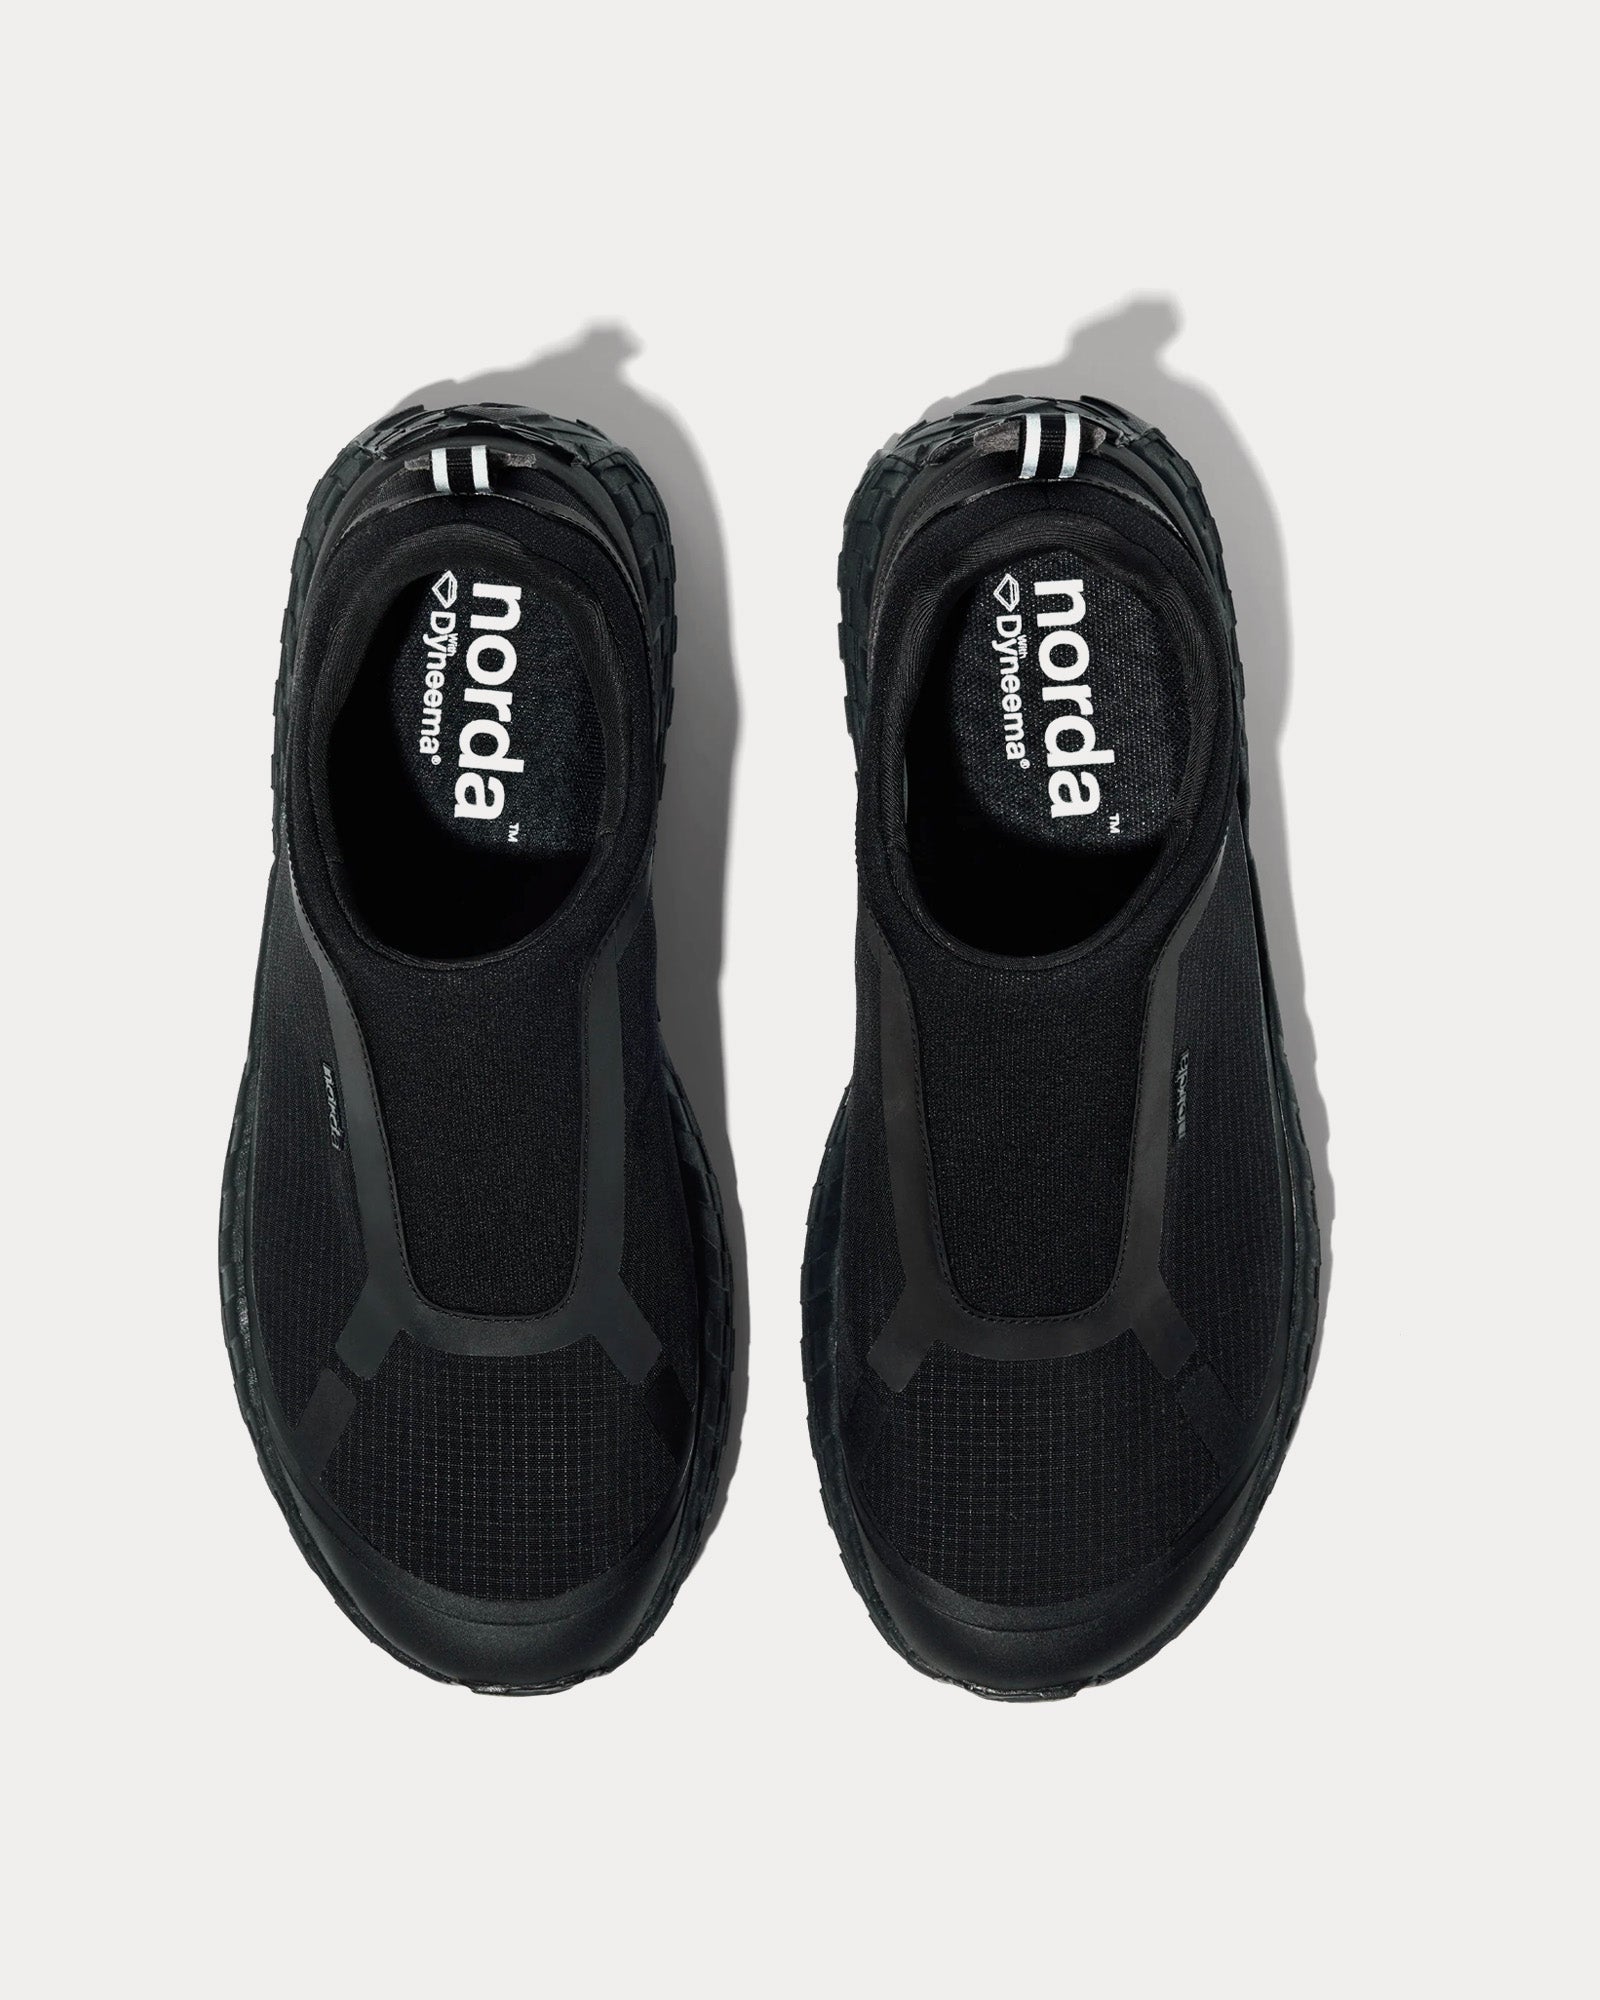 Norda - 003 M Pitch Black Running Shoes